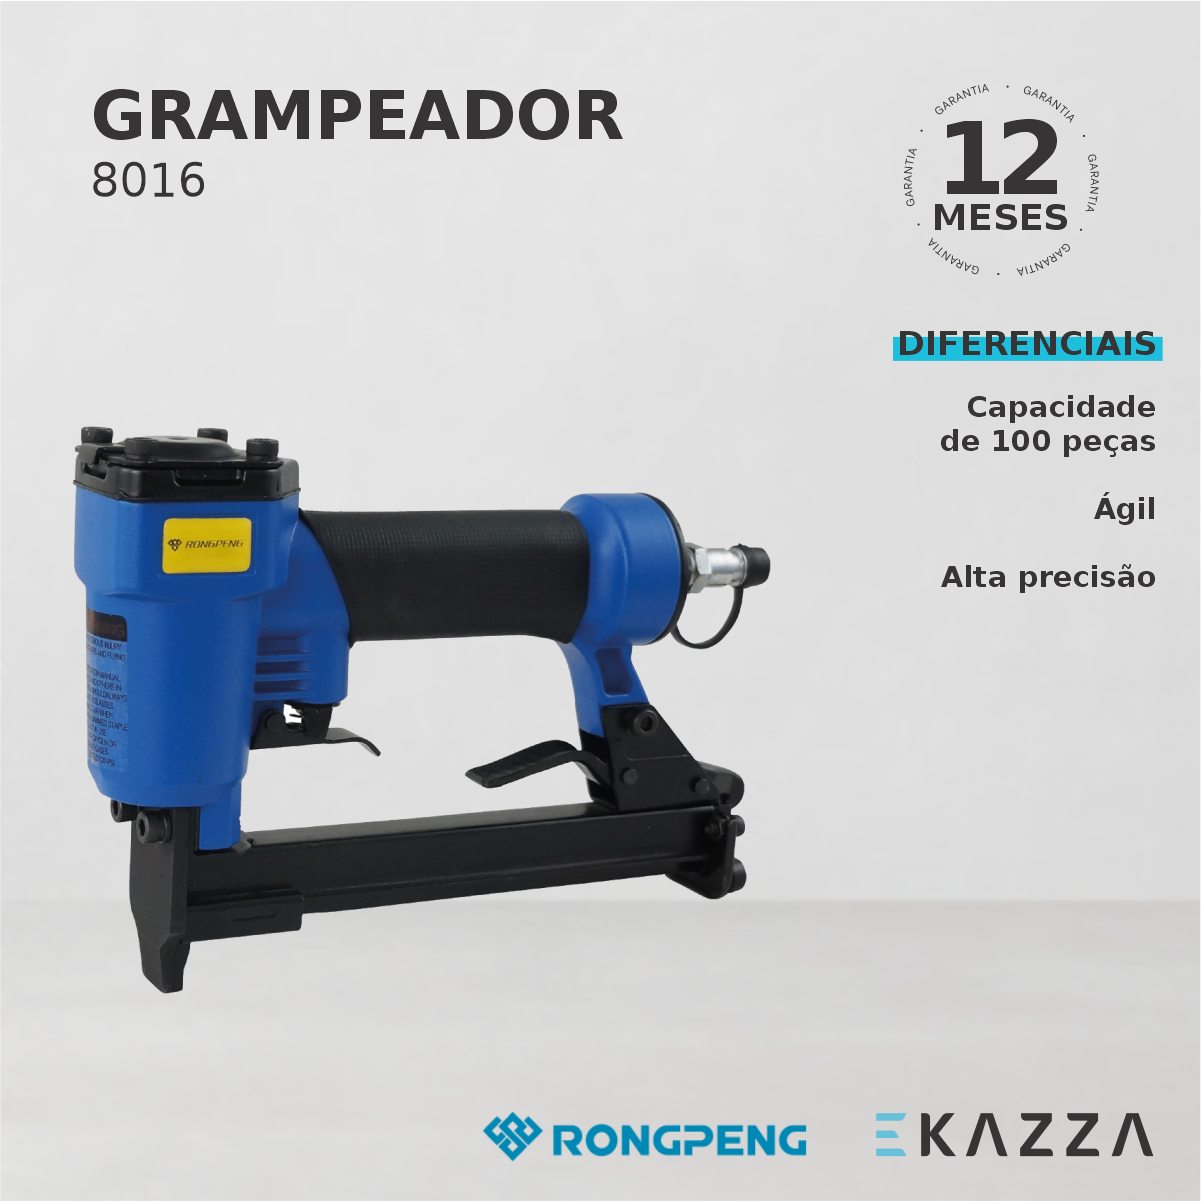 Grampeador 8016 - RONGPENG - 3